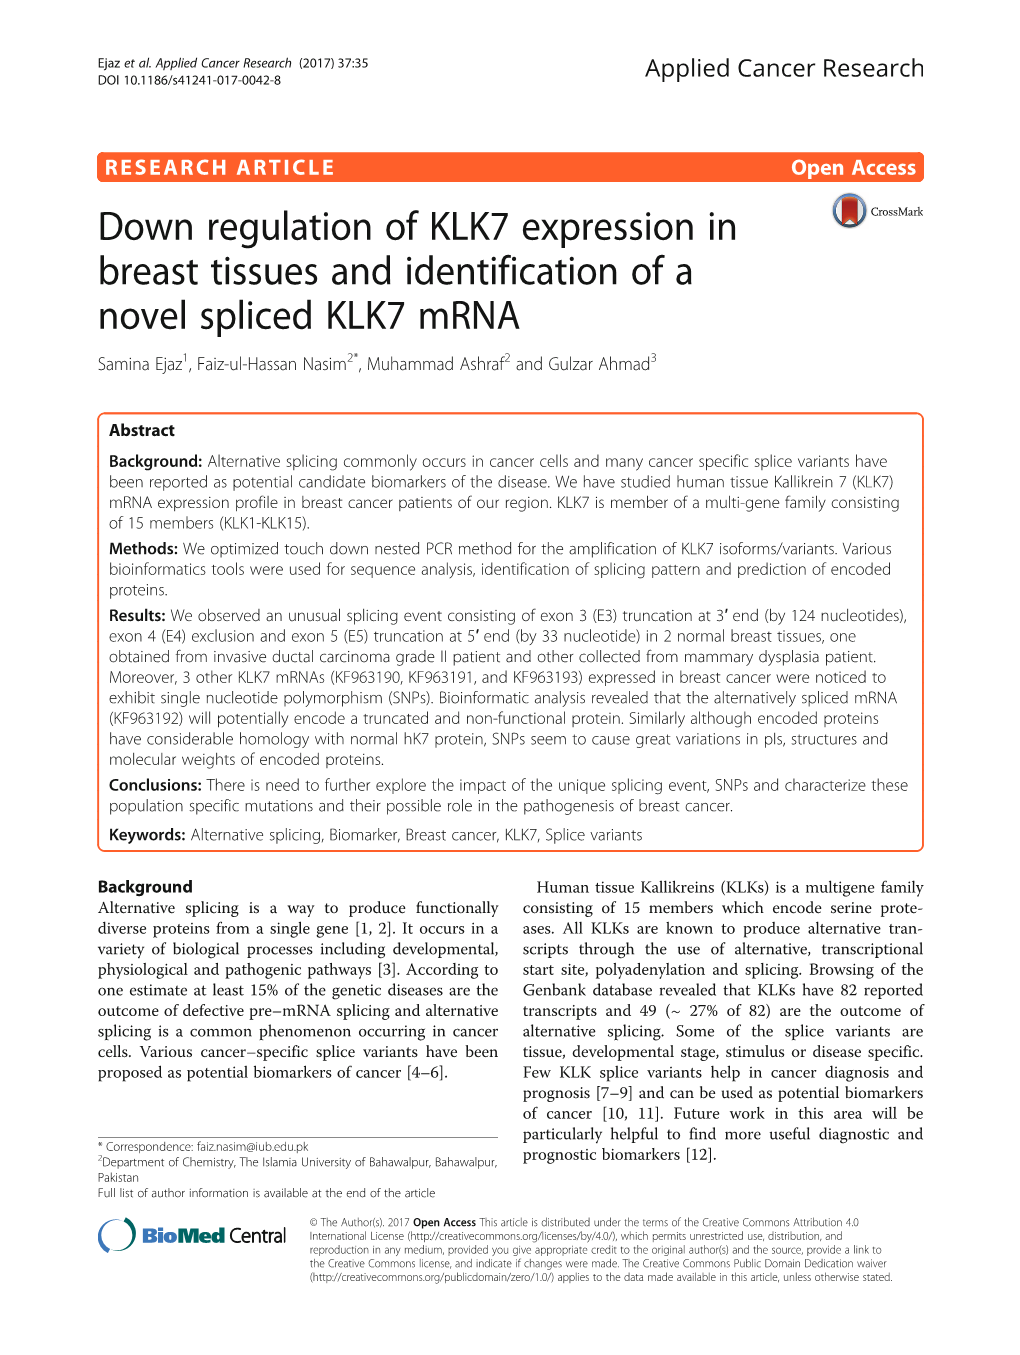 Down Regulation of KLK7 Expression in Breast Tissues and Identification of a Novel Spliced KLK7 Mrna